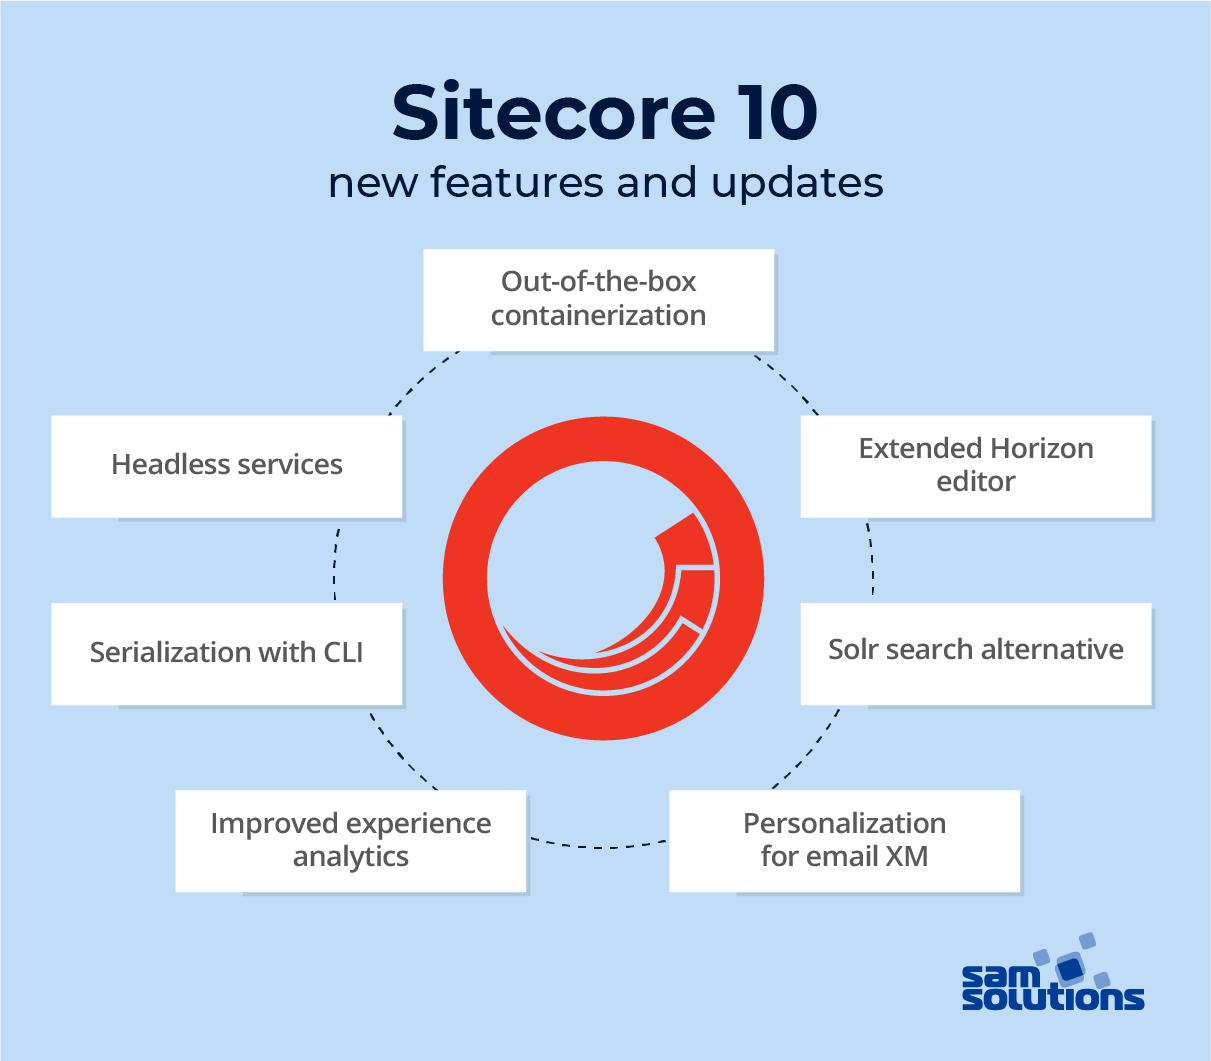 Why upgrade to Sitecore 10